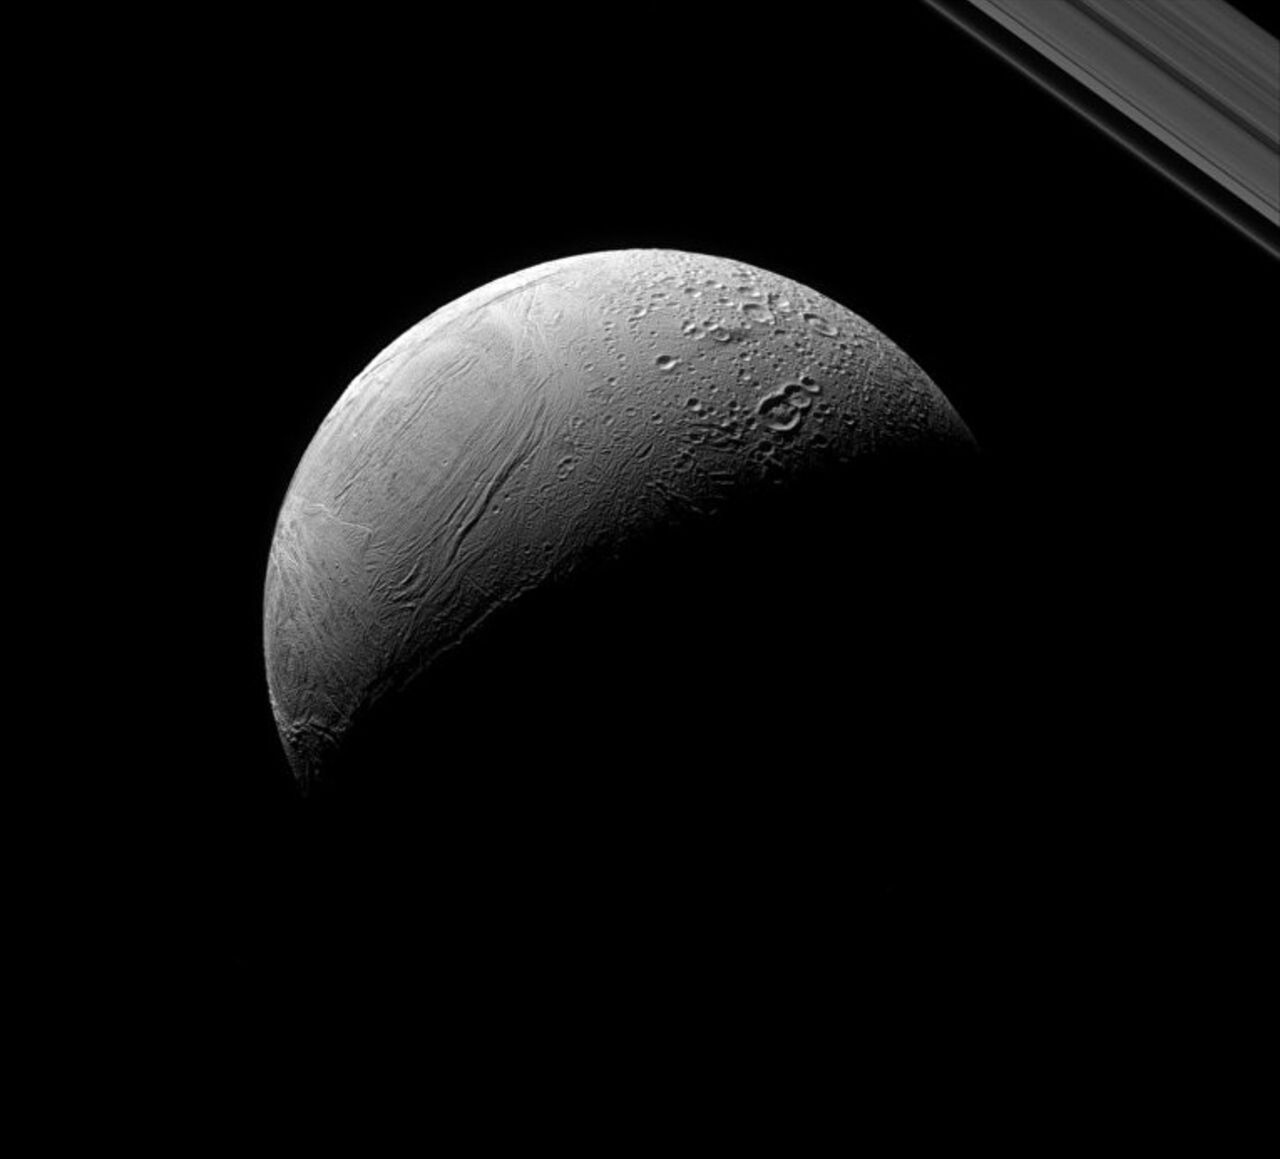 Аппарат «Кассини» показал новый снимок спутника Сатурна Энцелада. Фото